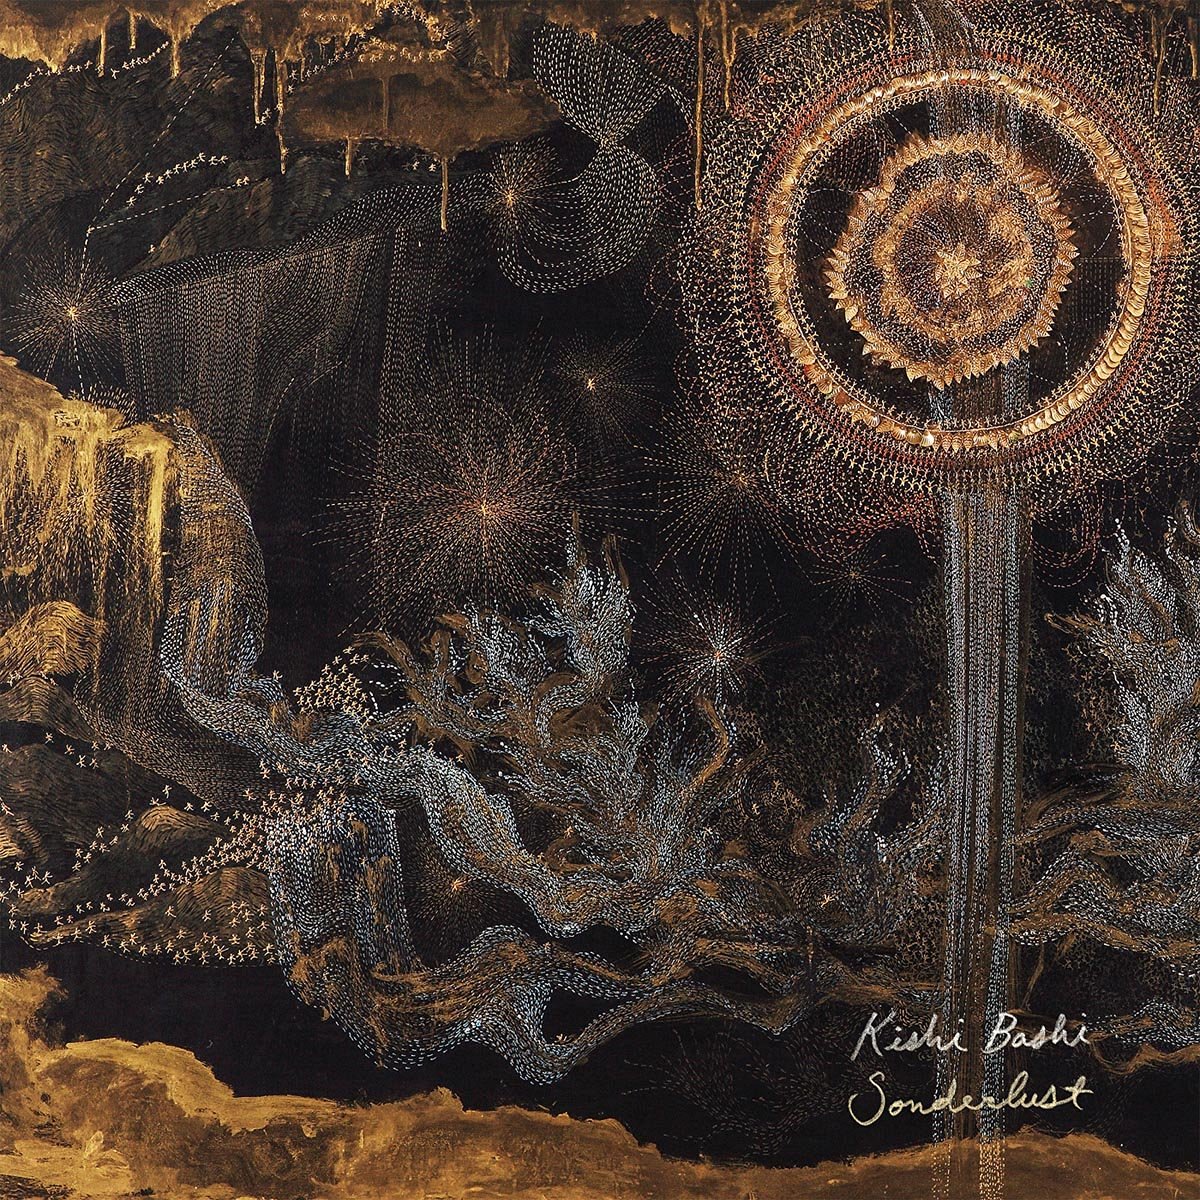 Kishi Bashi - Sonderlust (Joyful Noise Recordings) 1